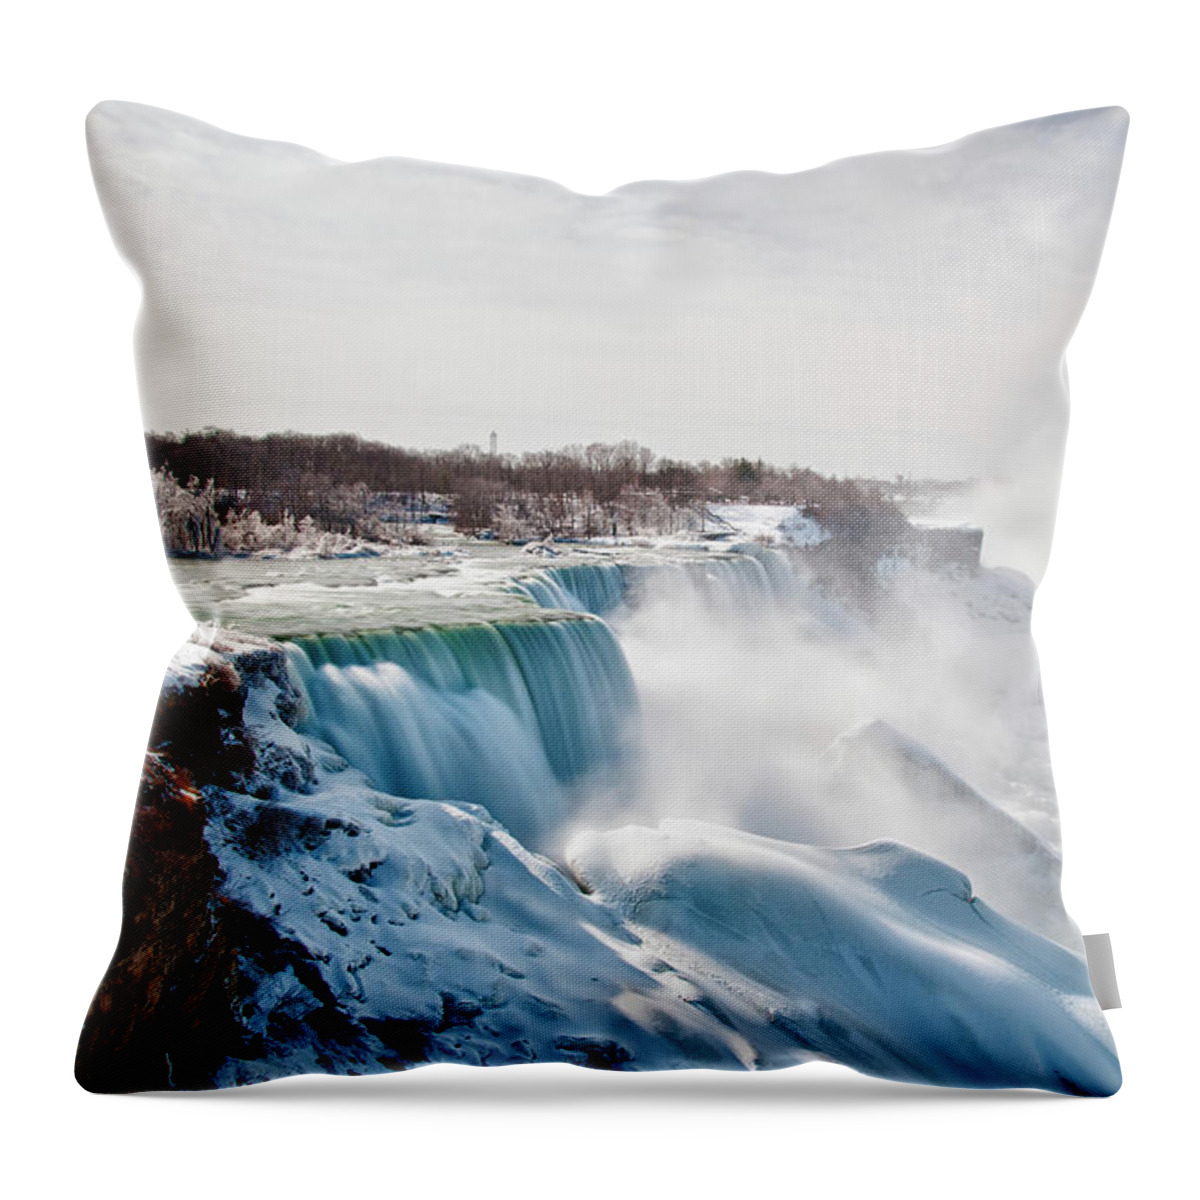 Niagara Falls Throw Pillow featuring the photograph Niagara Falls 4589 by Guy Whiteley